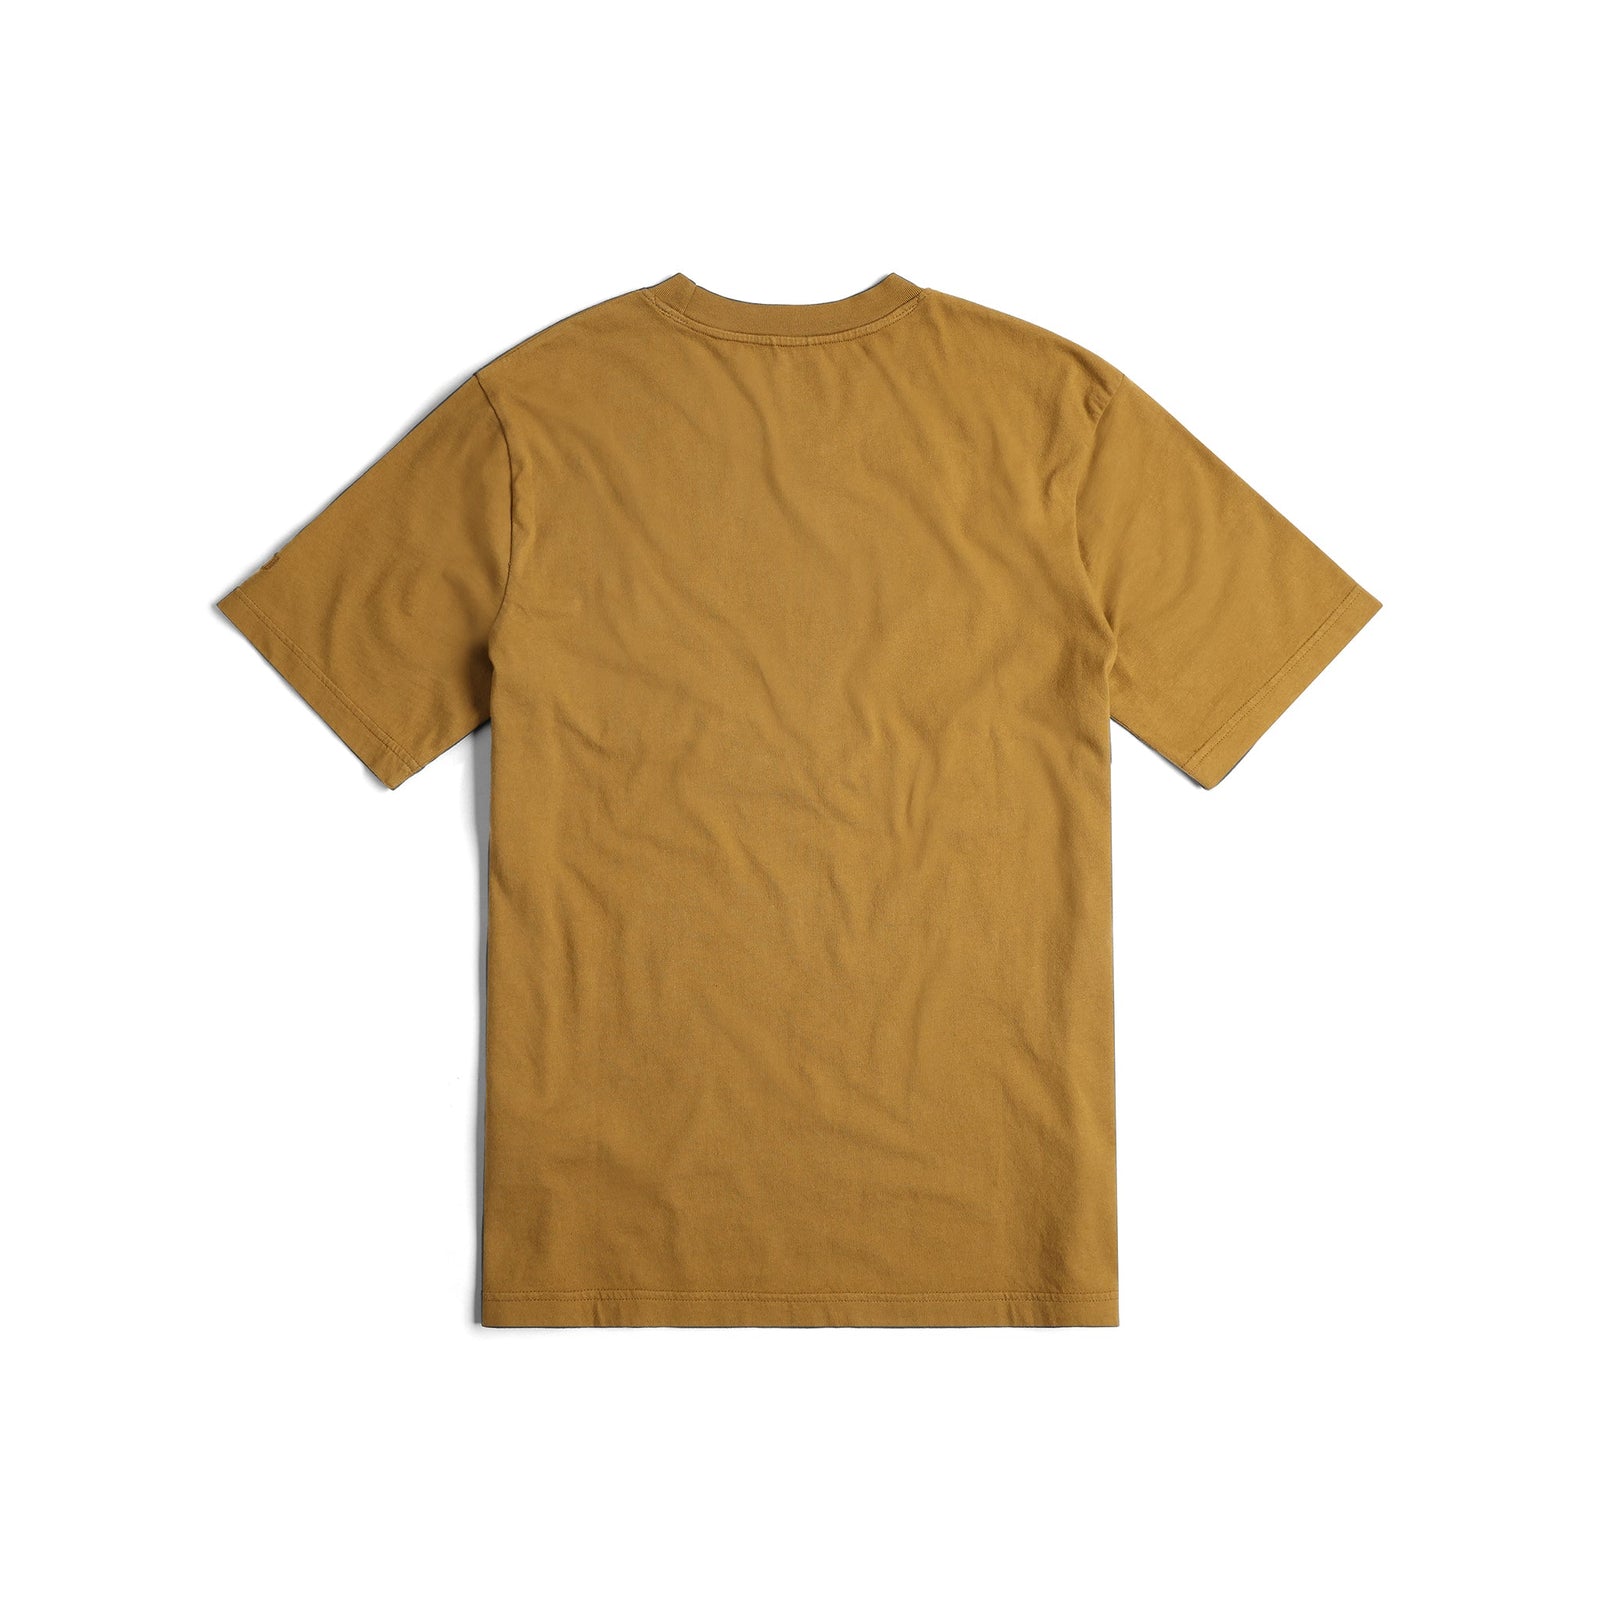 Topo Designs Men's Dirt Pocket Tee 100% organic cotton short sleeve t-shirt in "Dark Khaki"